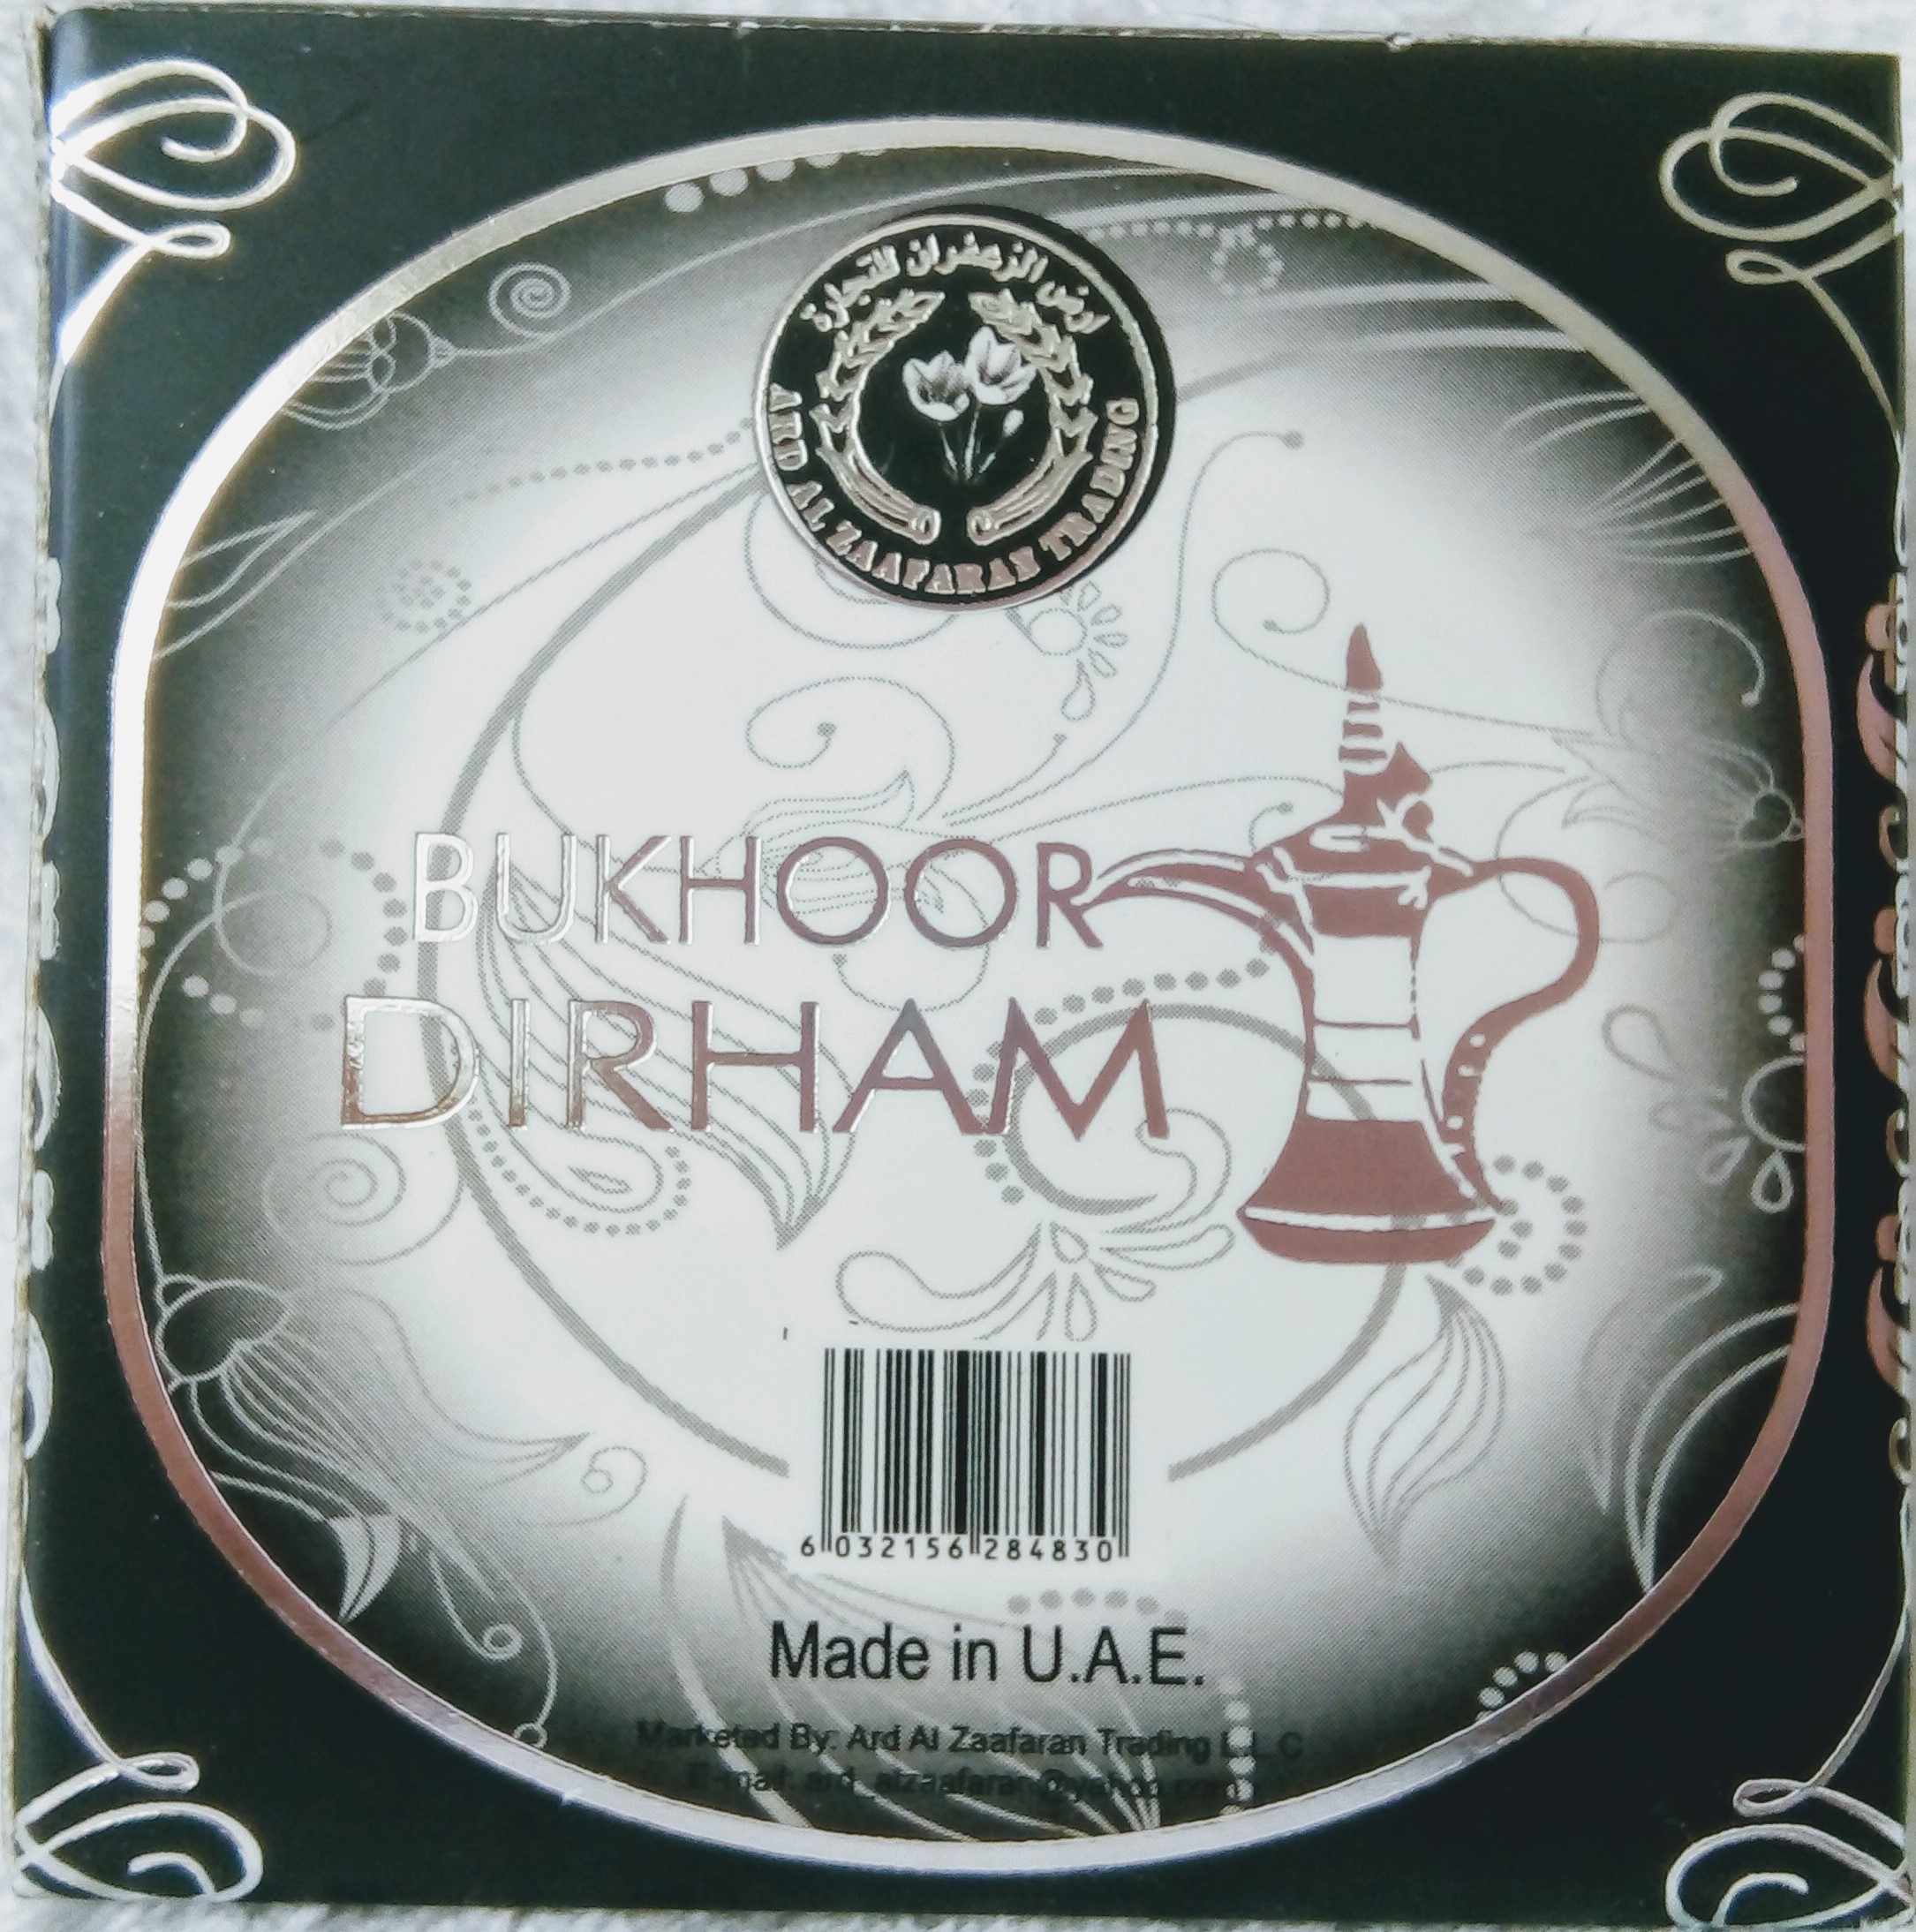 40 g x Bakhoor Dirham Ard Al-Zaafran Incense Bakhour Oud Solid Bar بخور درهم 